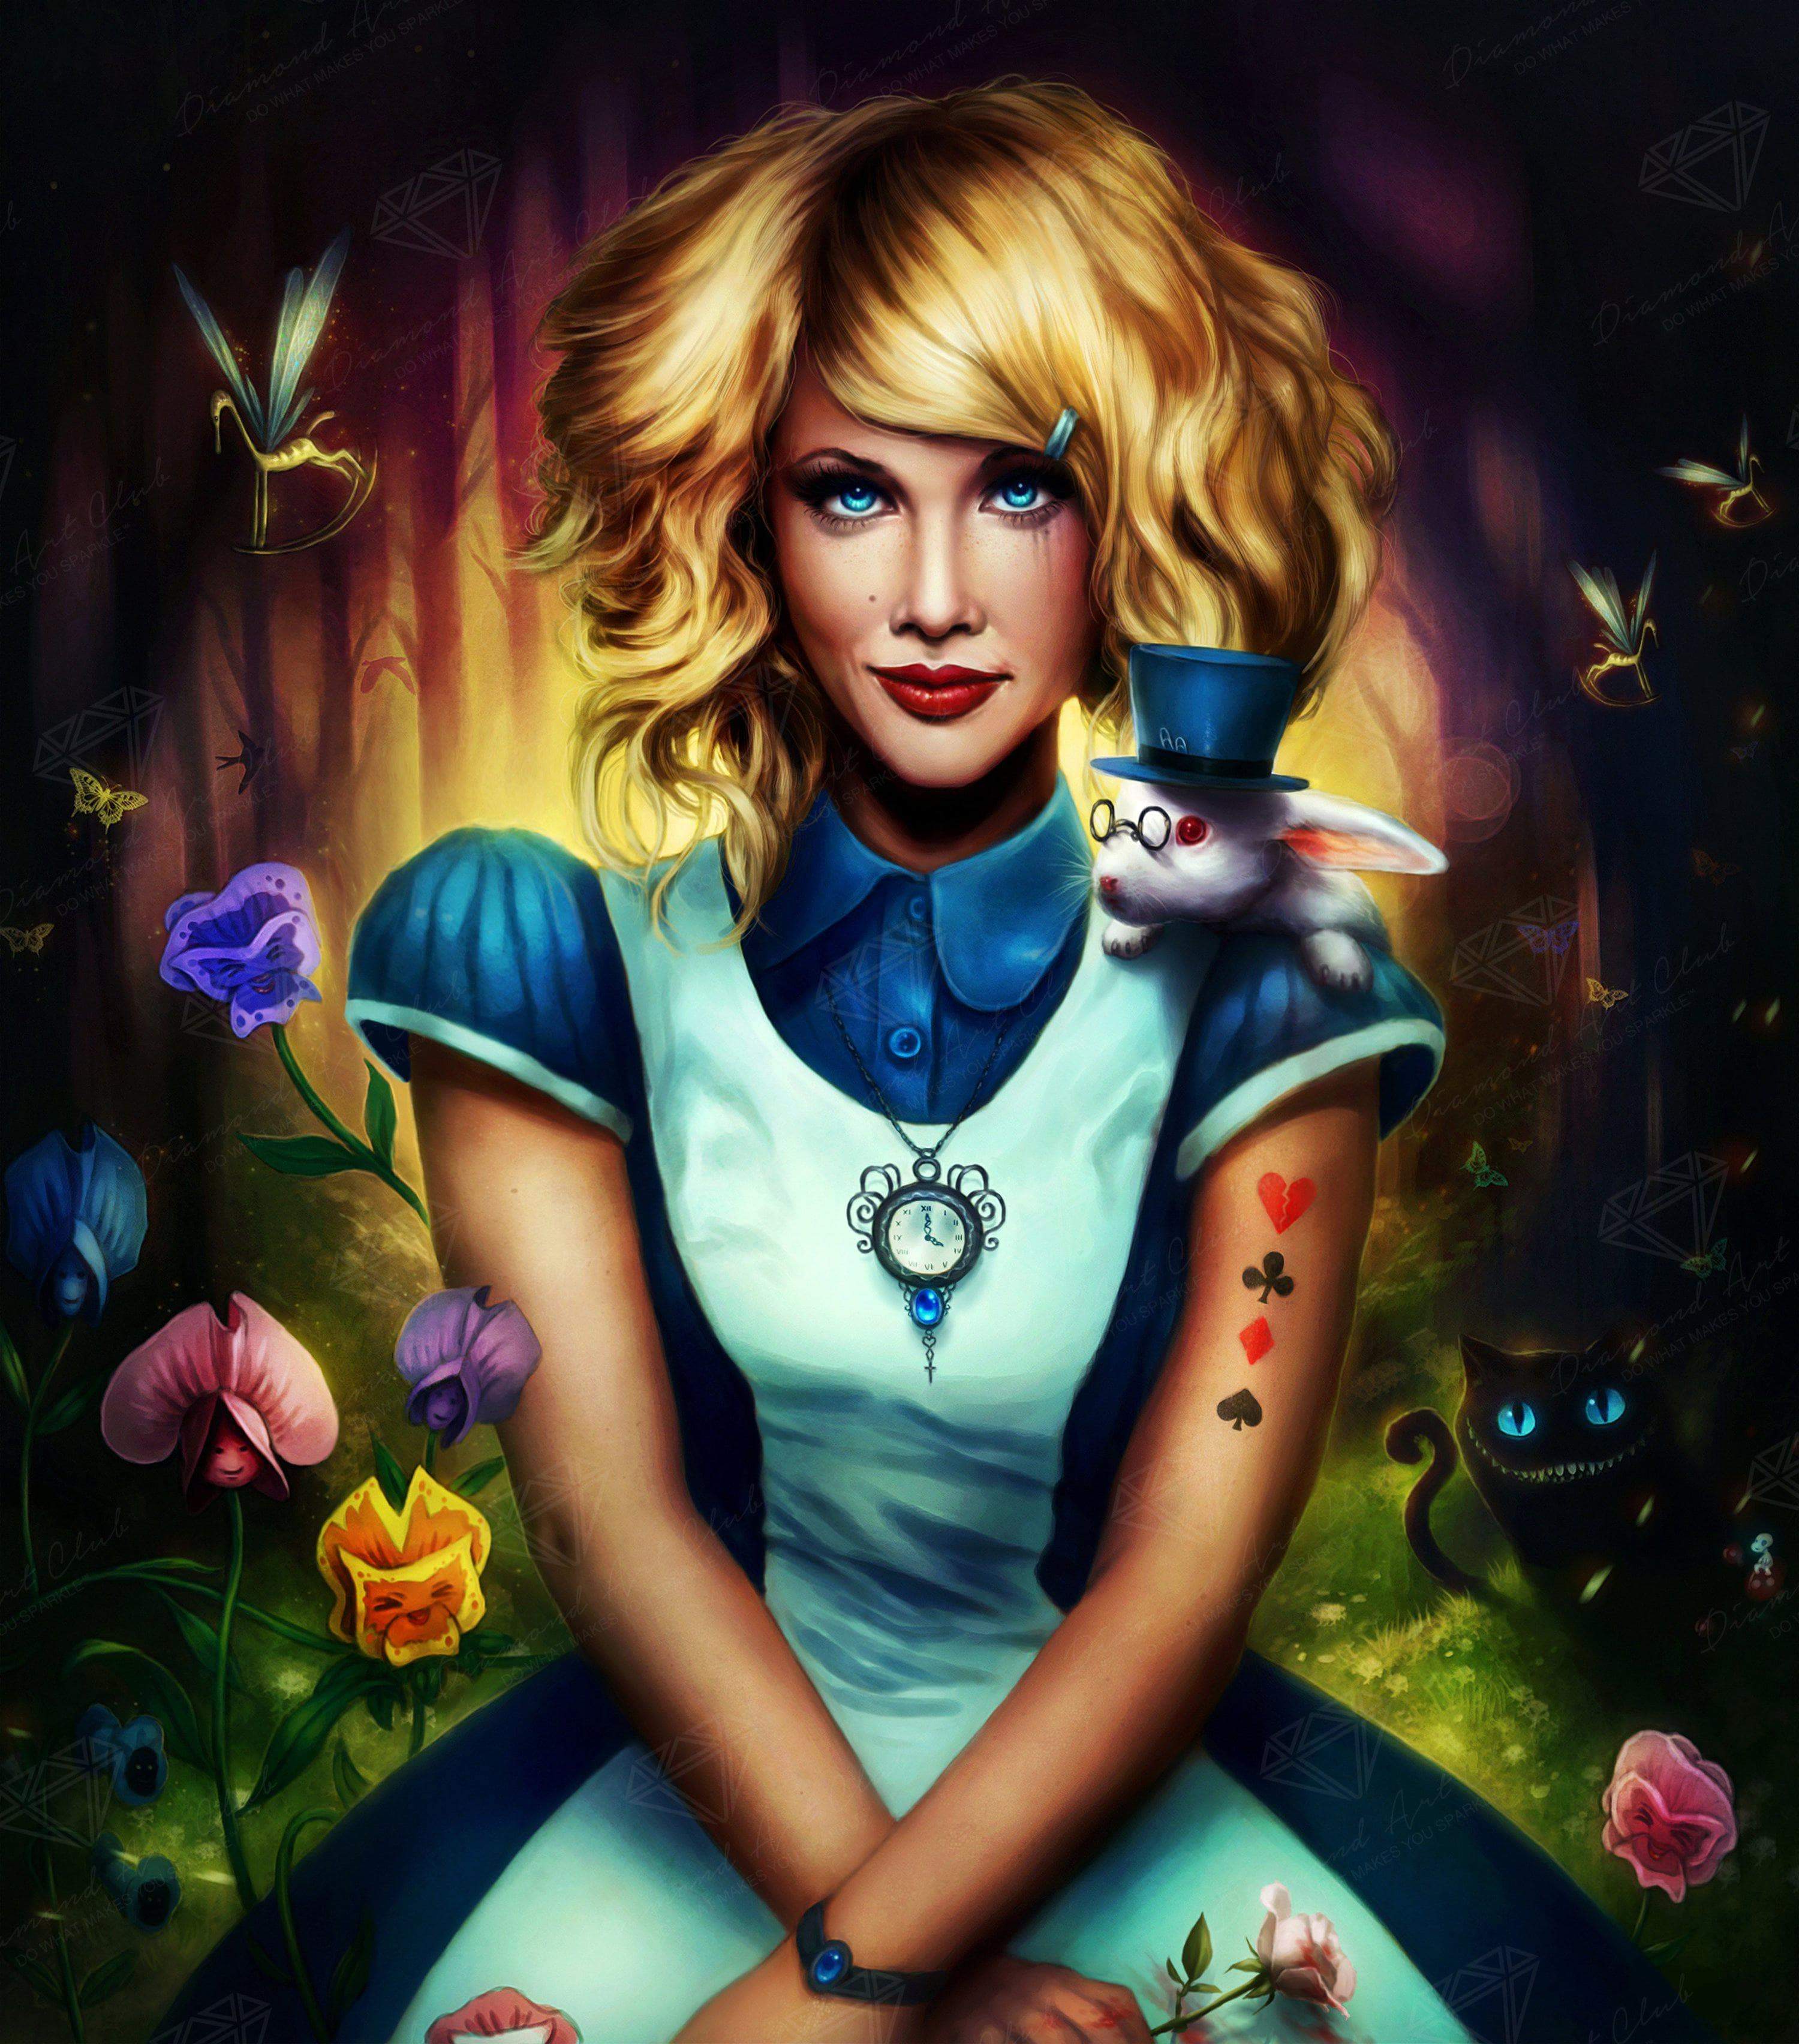 Diamond Art Club Alice in Wonderland Diamond Painting Kit